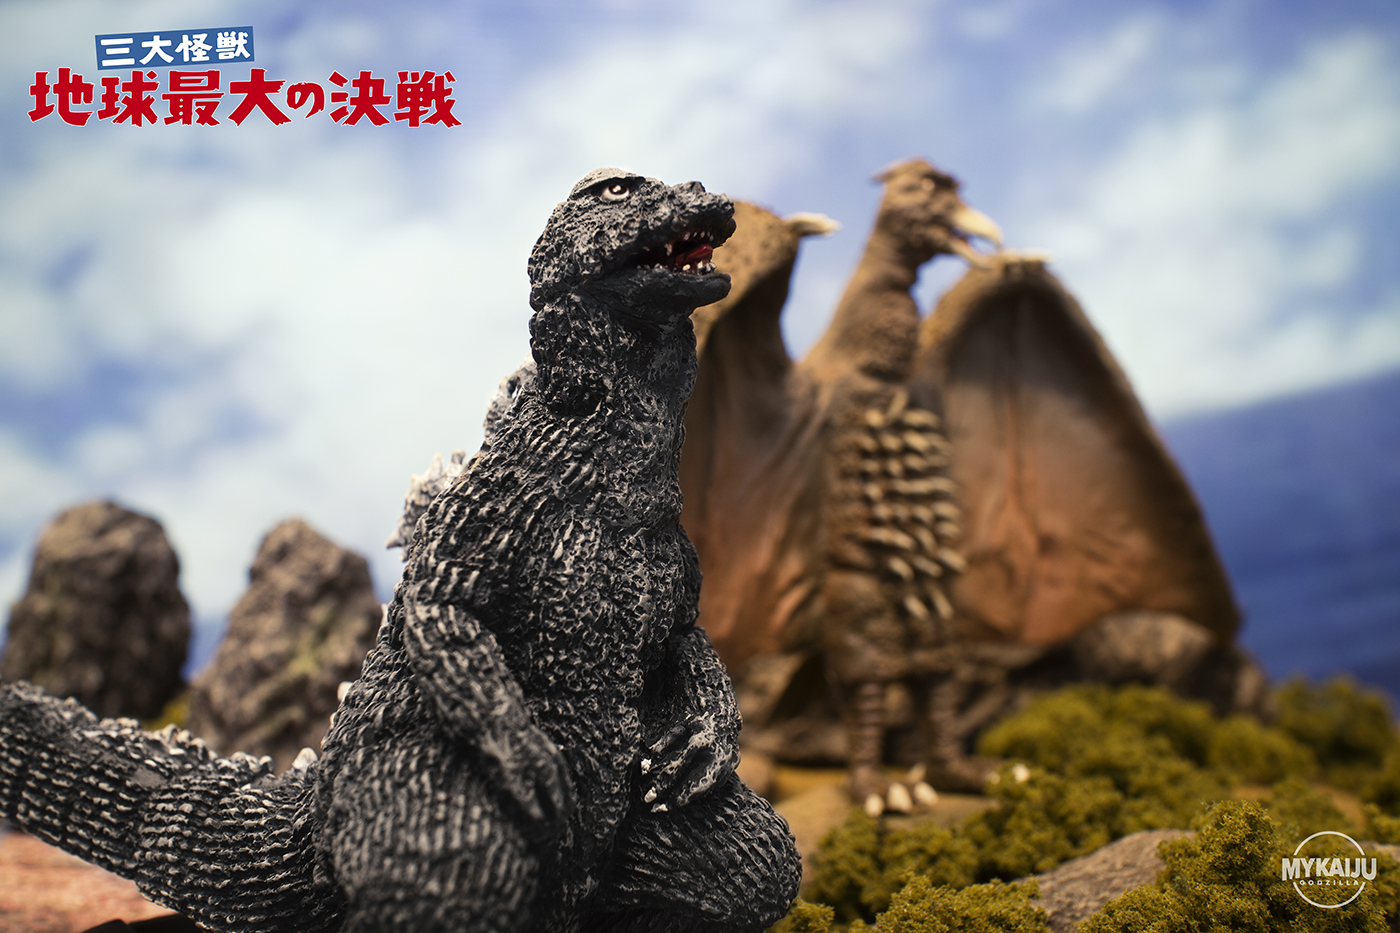 Godzilla & Rodan